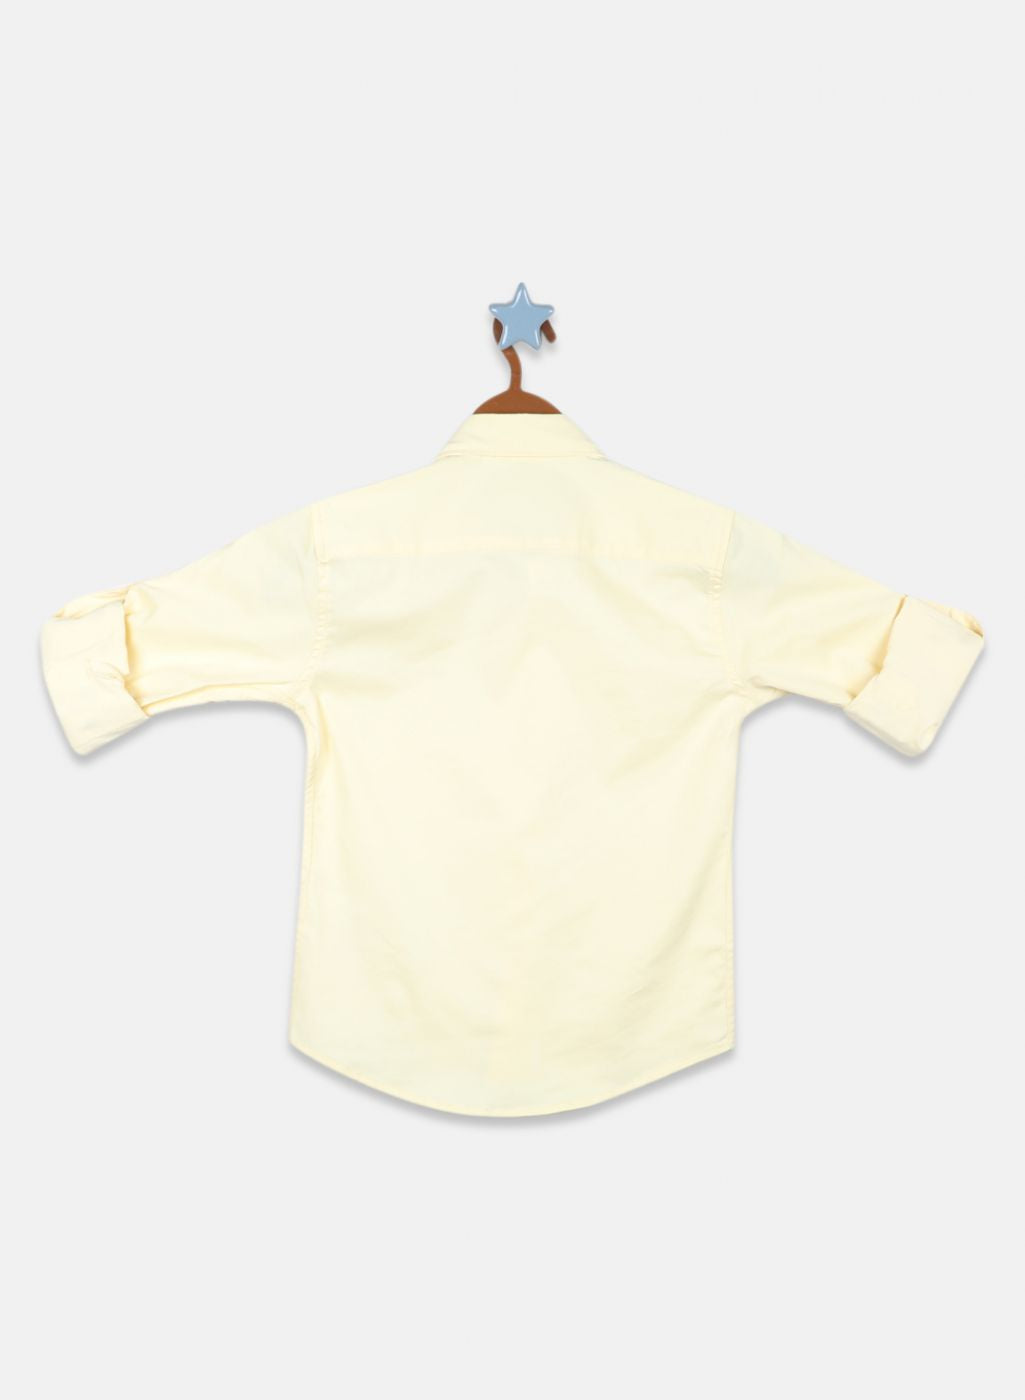 Boys Yellow Solid Shirt